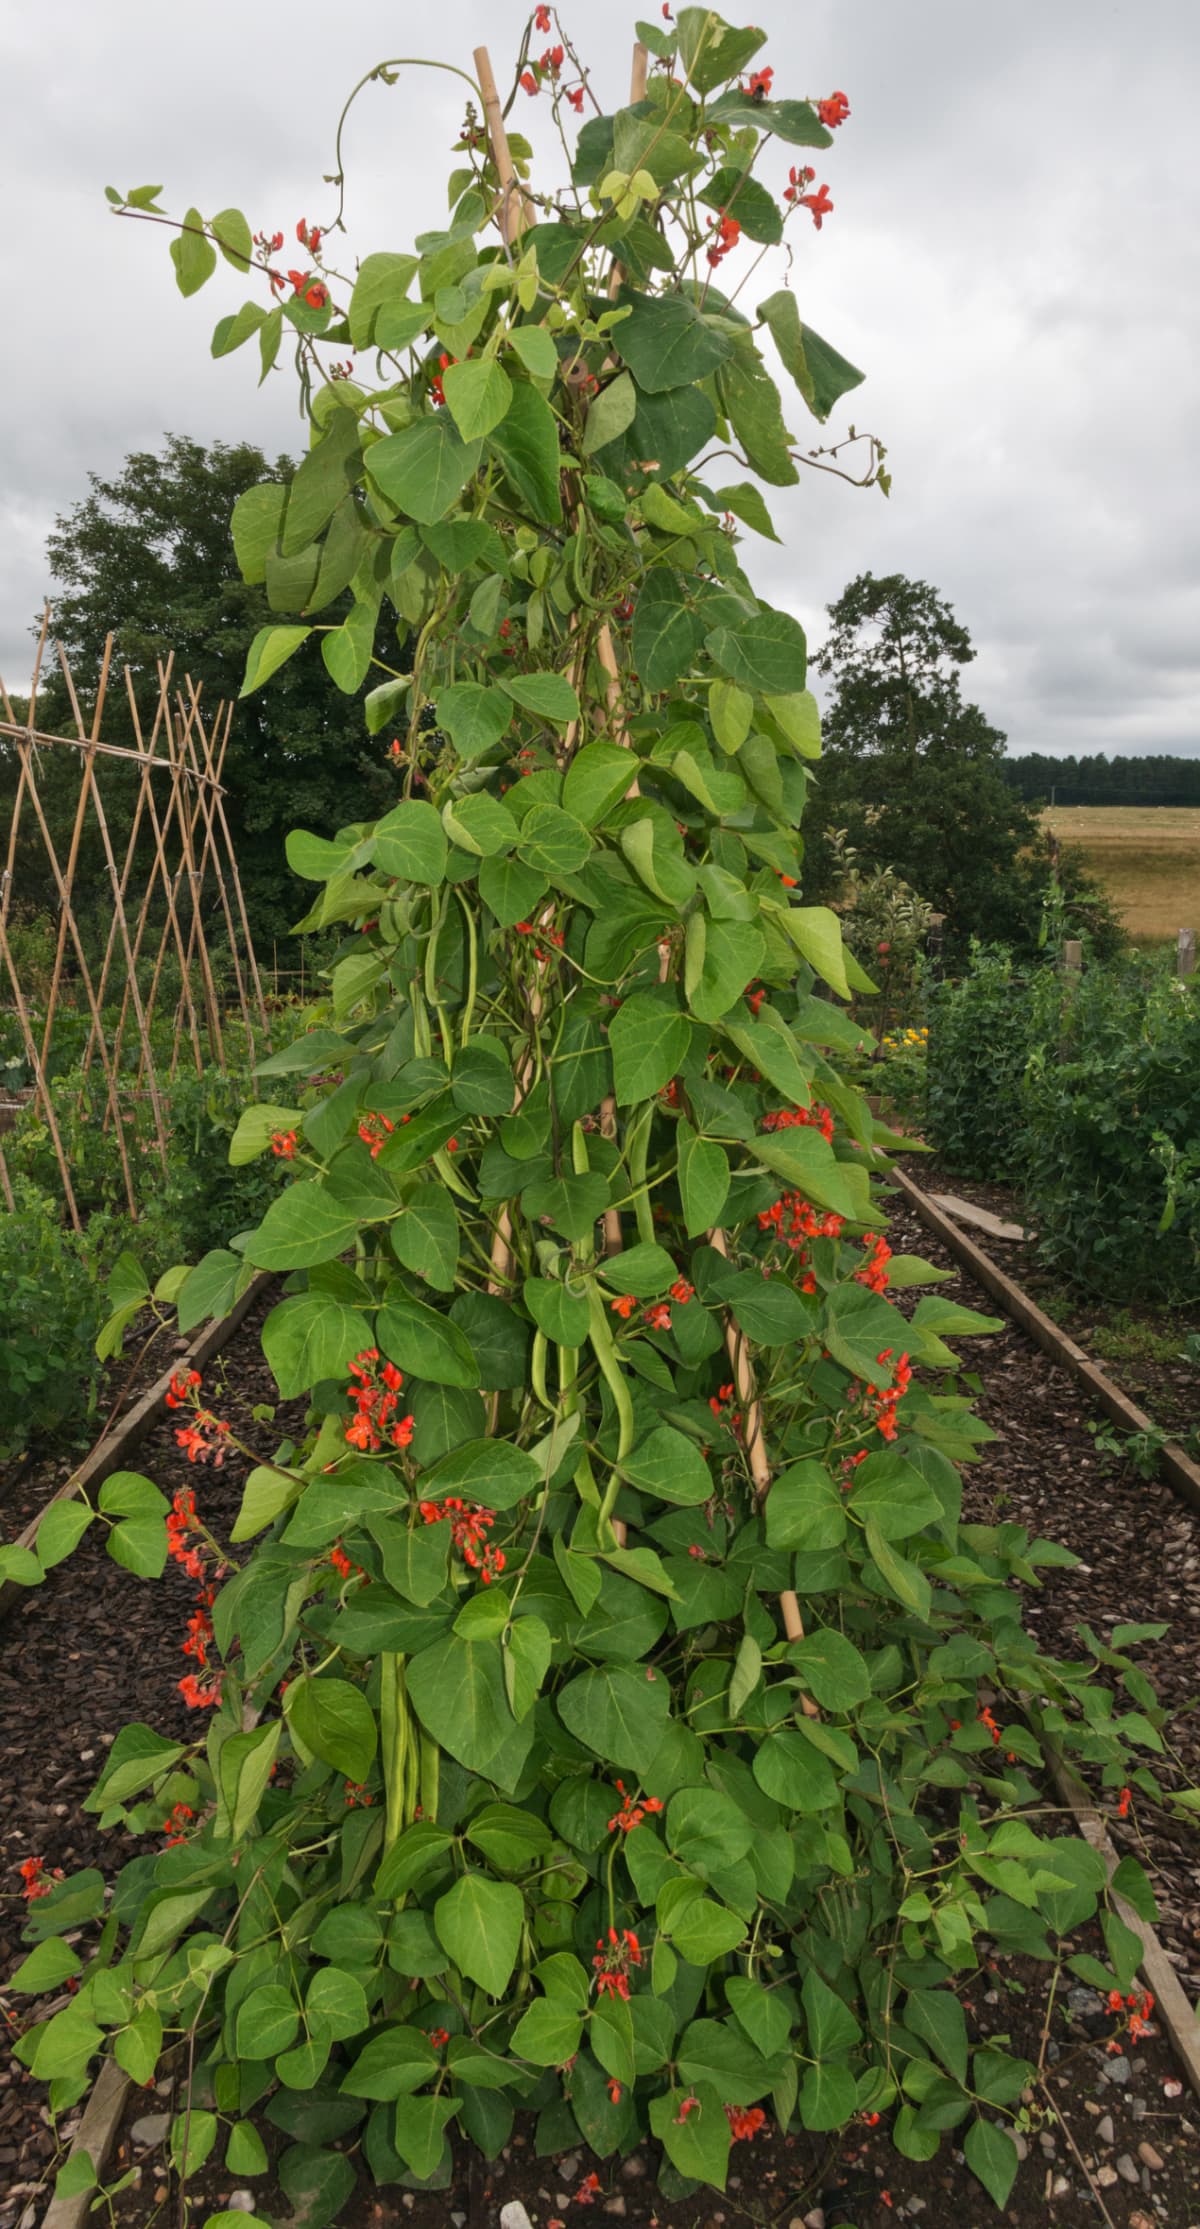 Runner or stick beans growing in a vegetable garden